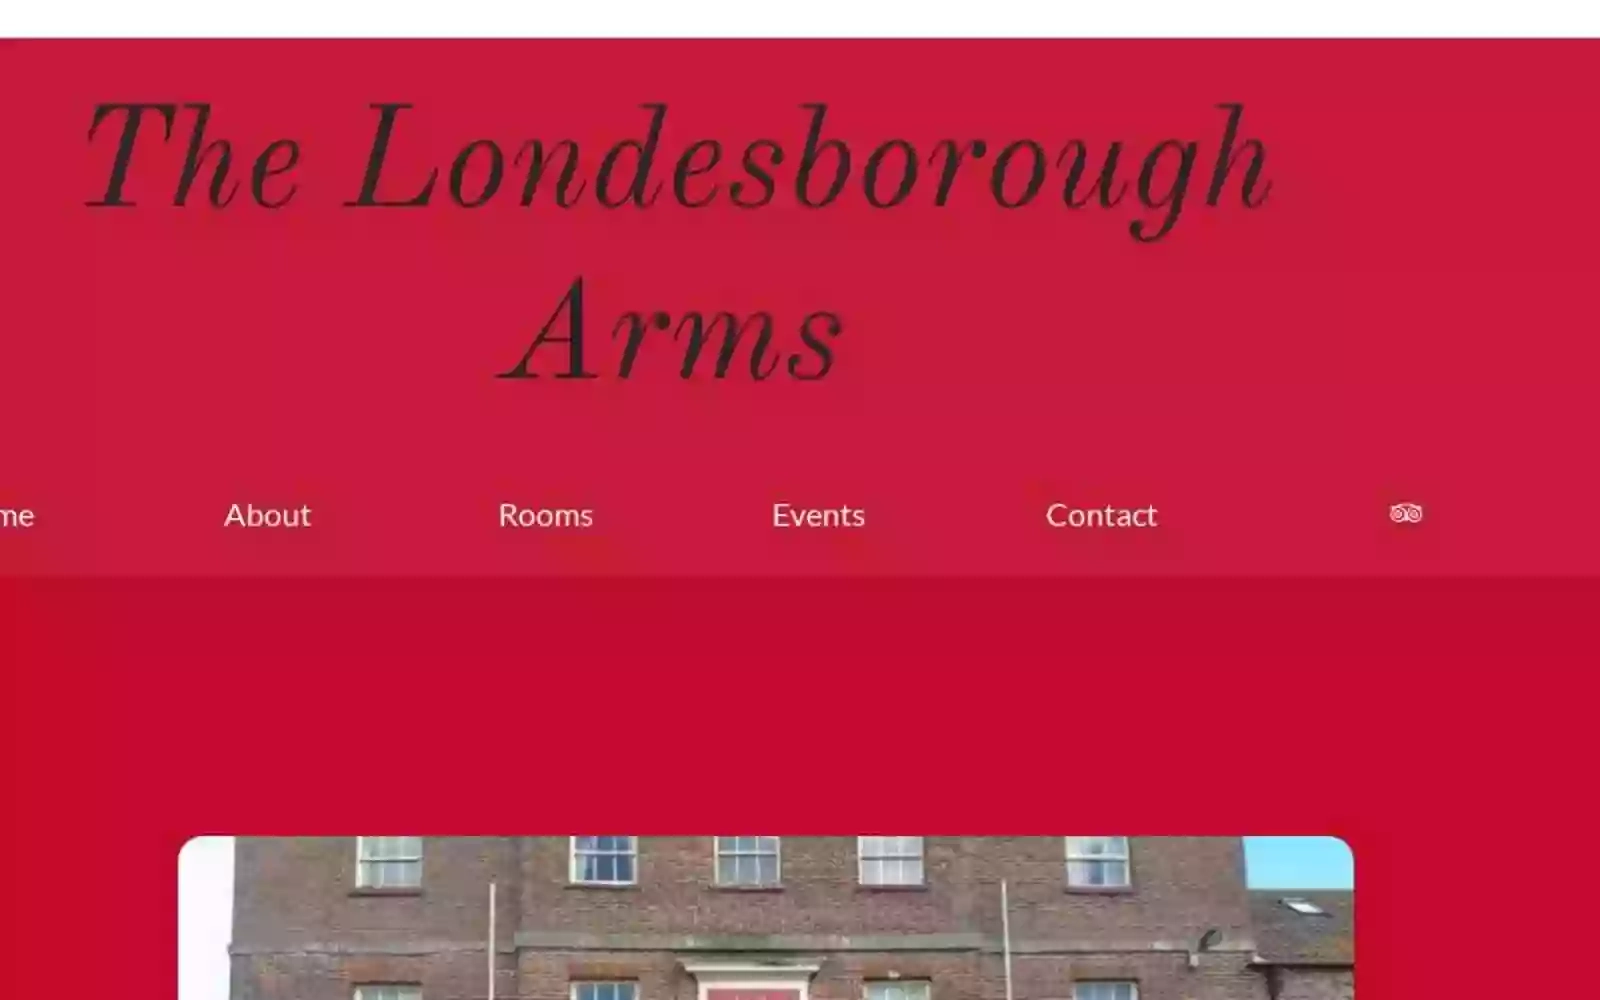 The Londesborough Arms